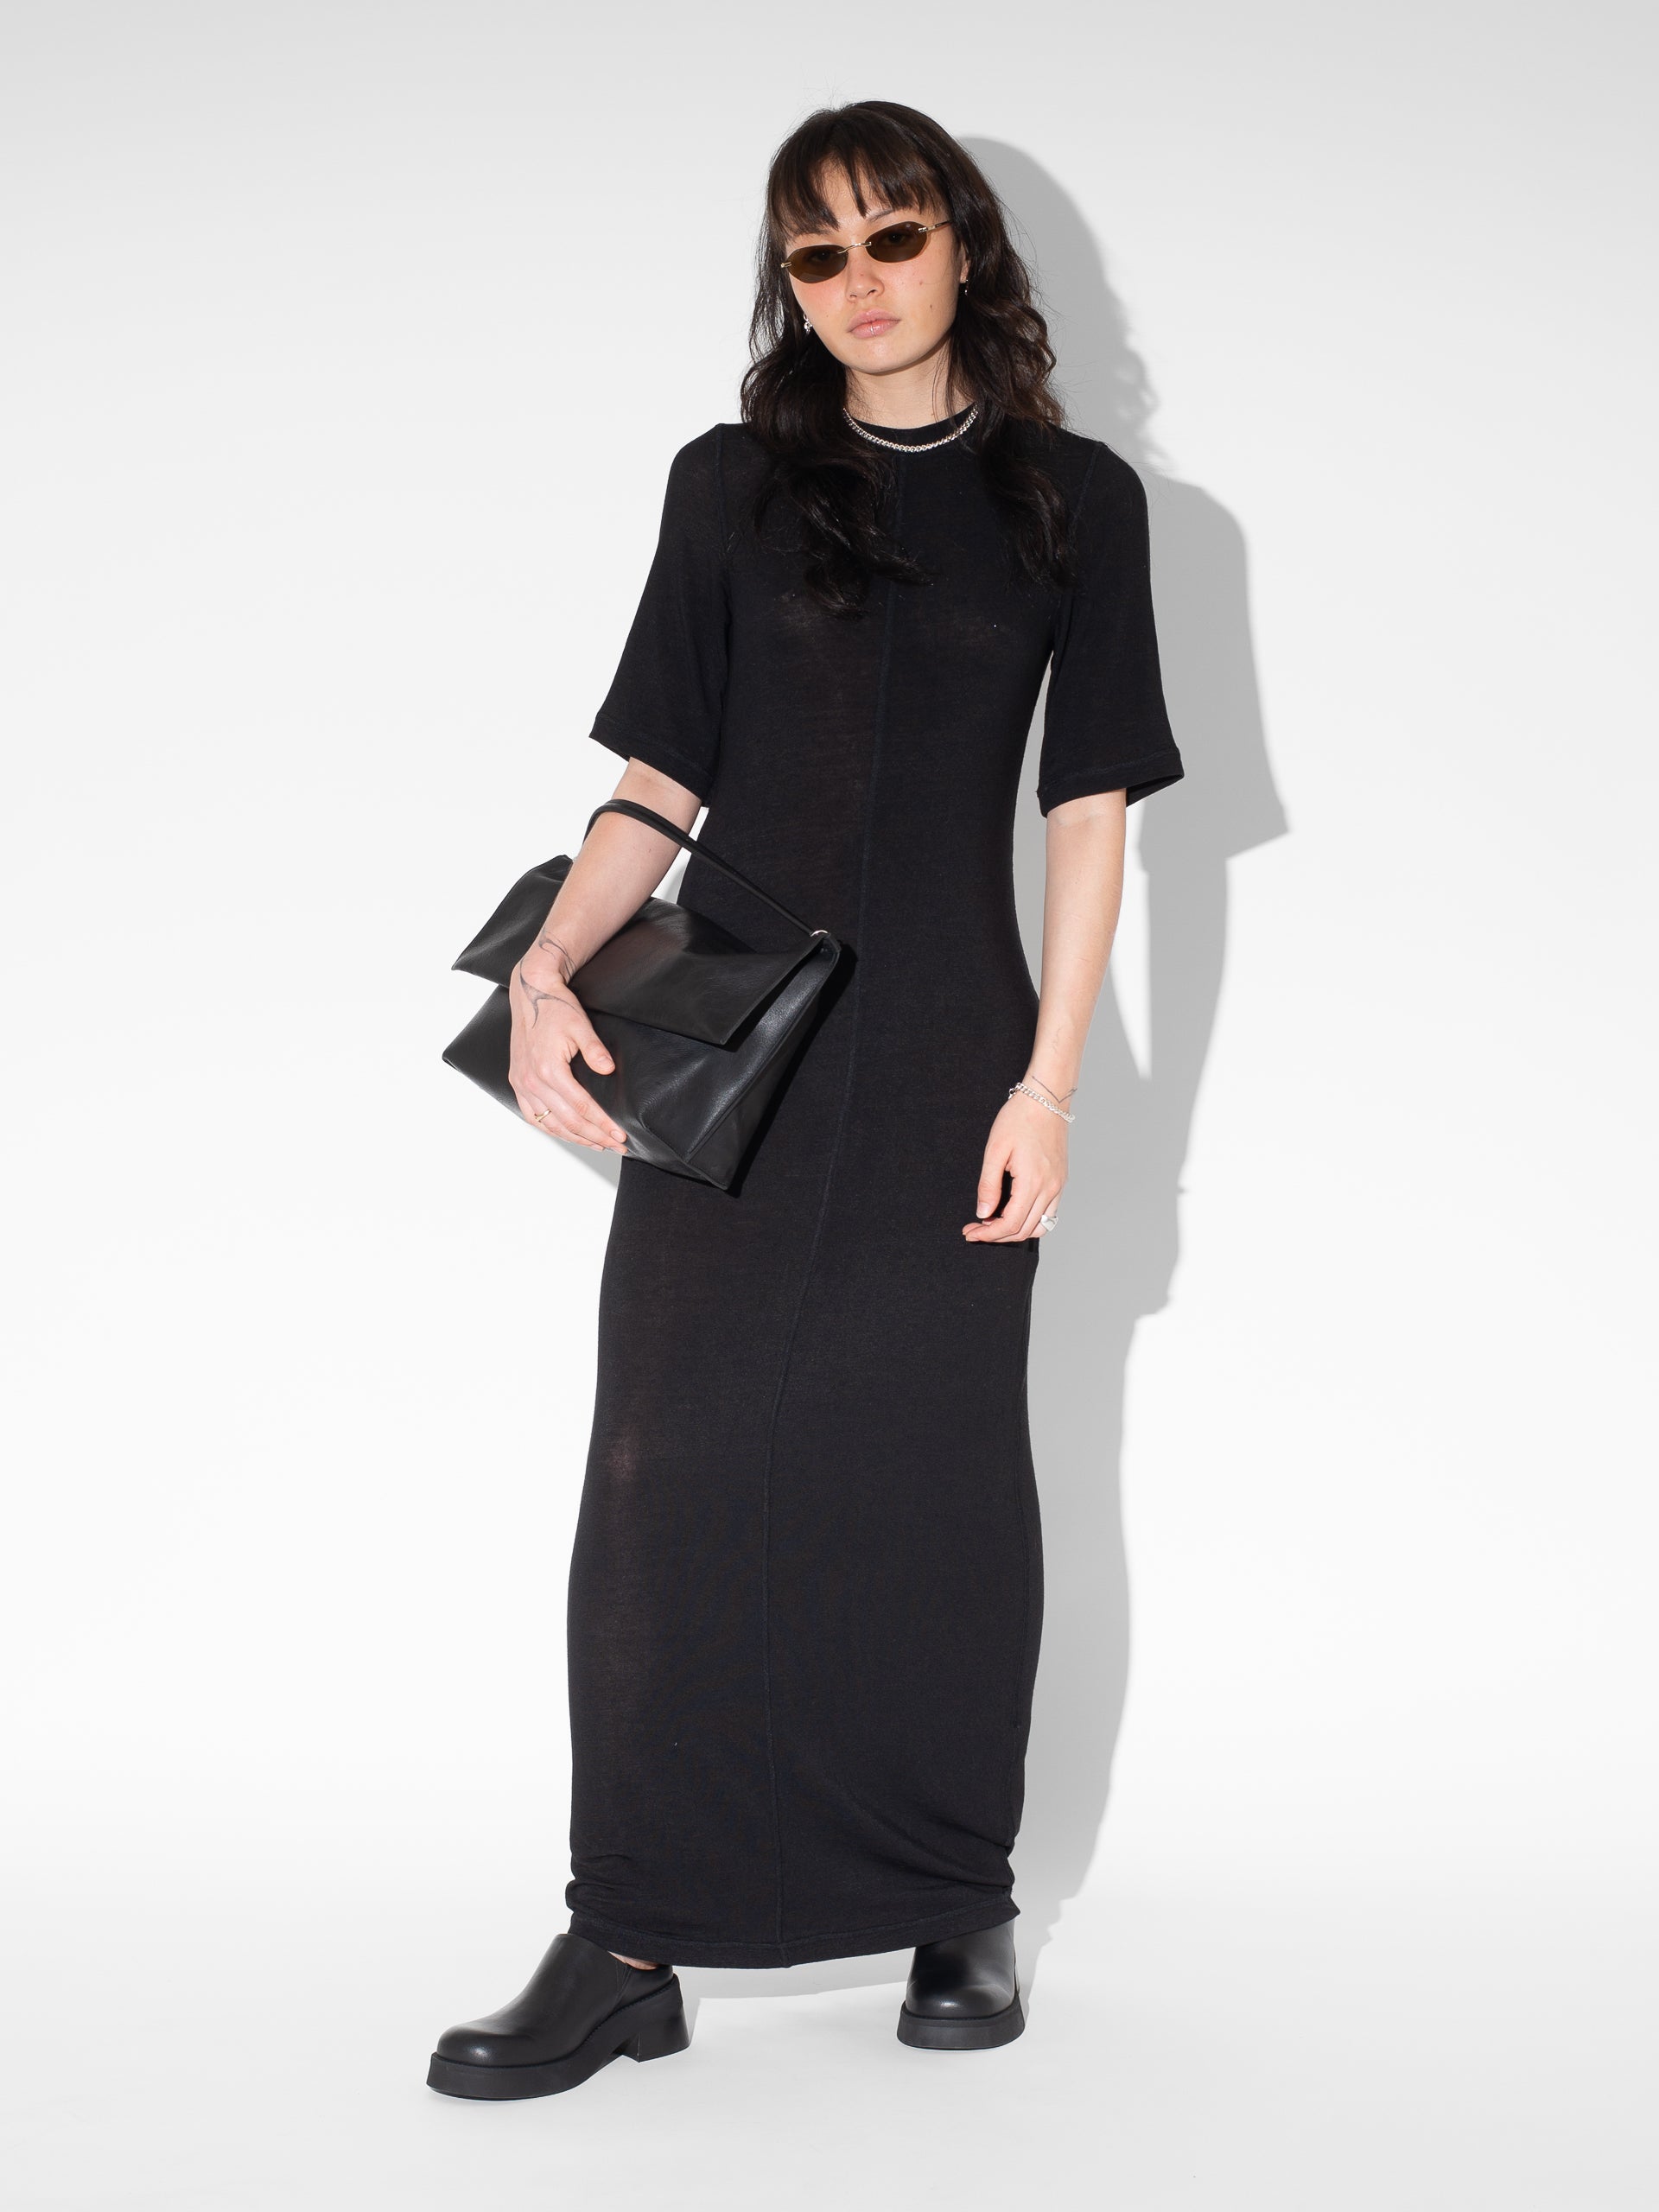 The-Lair-Apparel-Blaise-Dress-Black